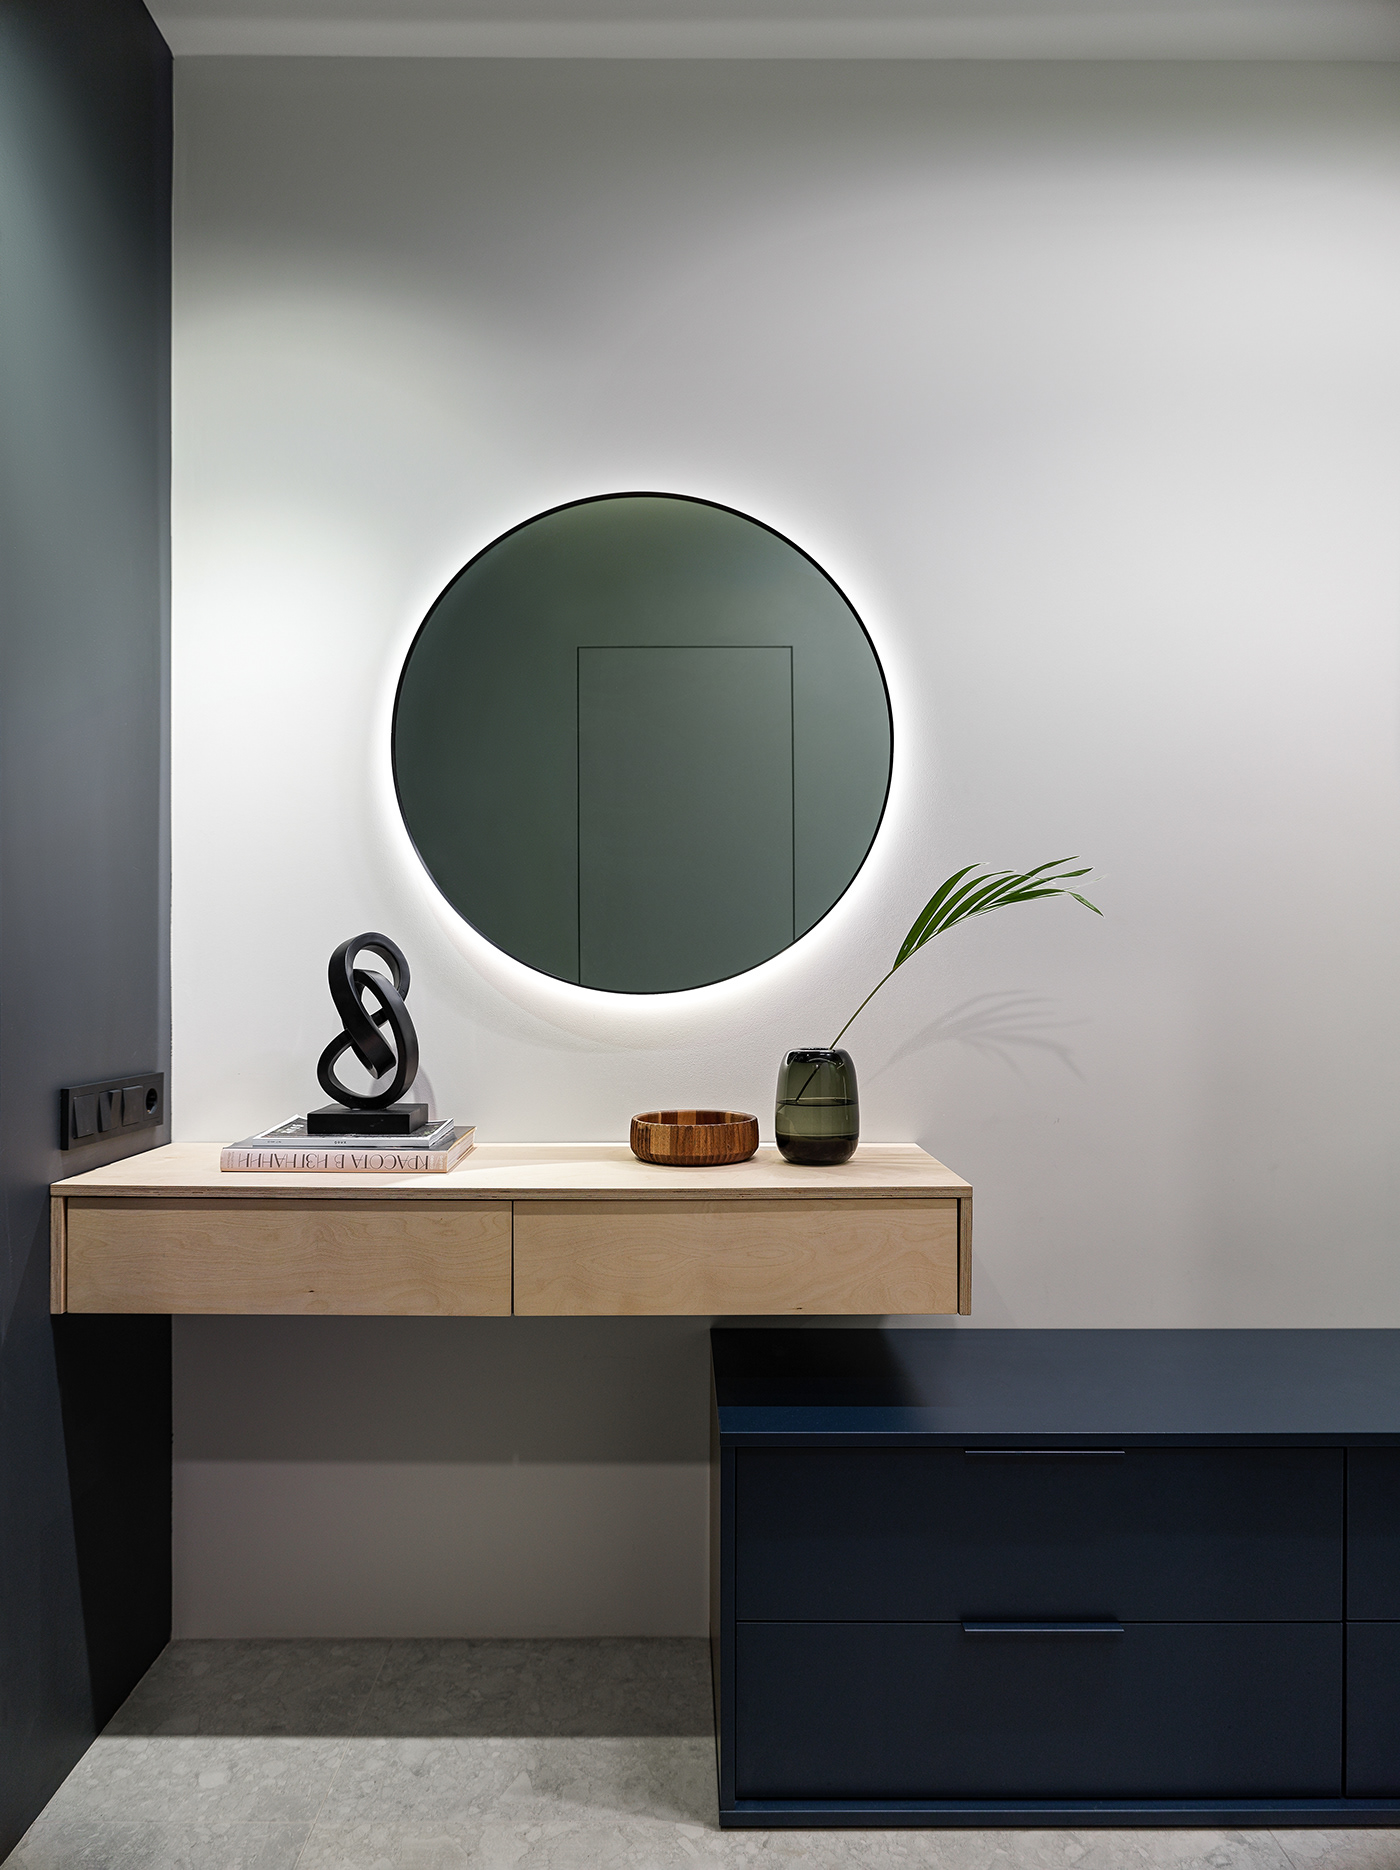 Minimalism Scandinavian interior design  DELO Hasselblad Photography  plywood furniture design  architecture modern